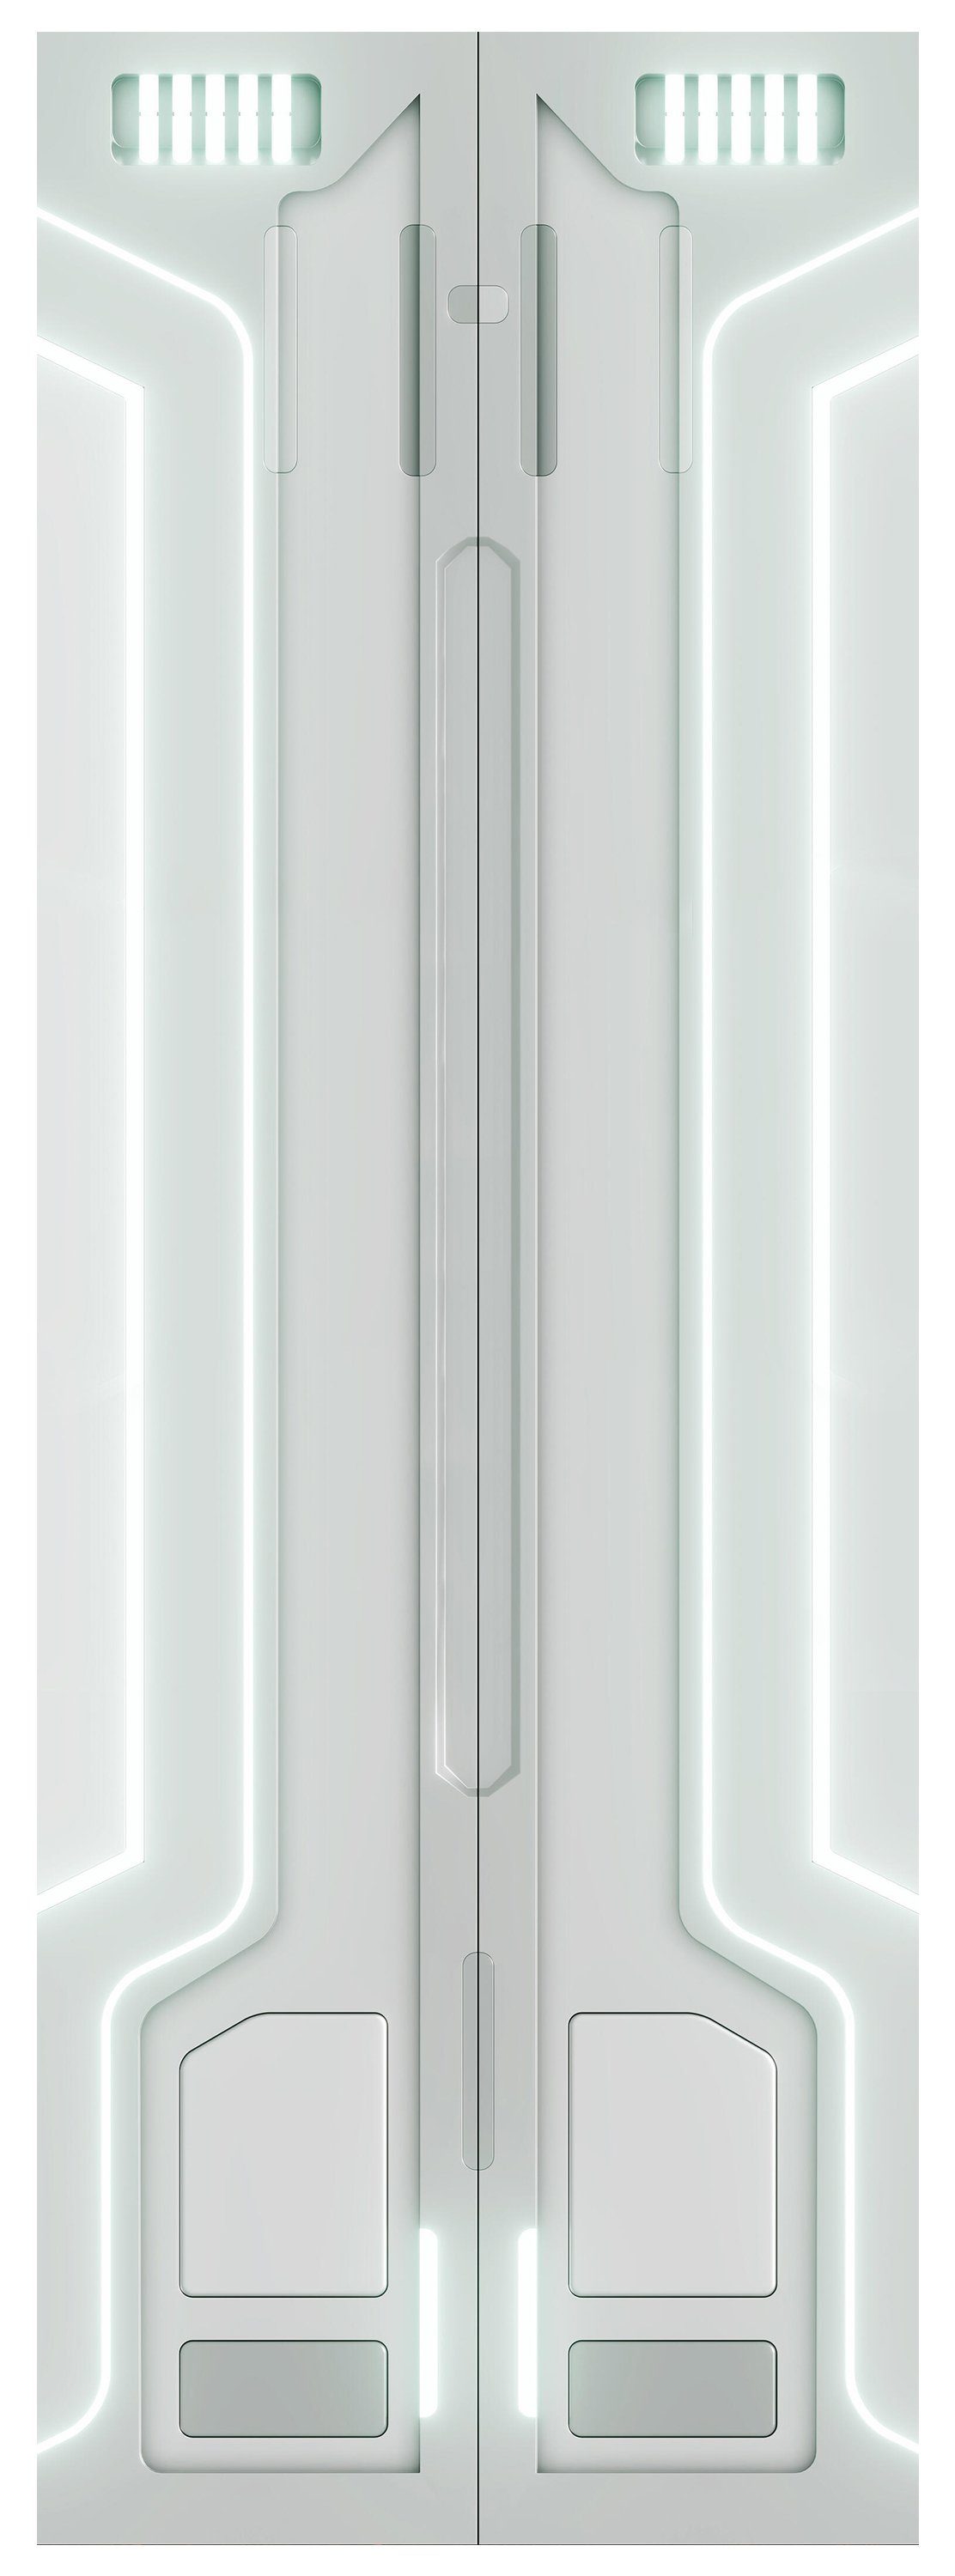 wandmotiv24 Türtapete Futuristische Tür, LED, Raumschiff, glatt, Fototapete, Wandtapete, Motivtapete, matt, selbstklebende Dekorfolie